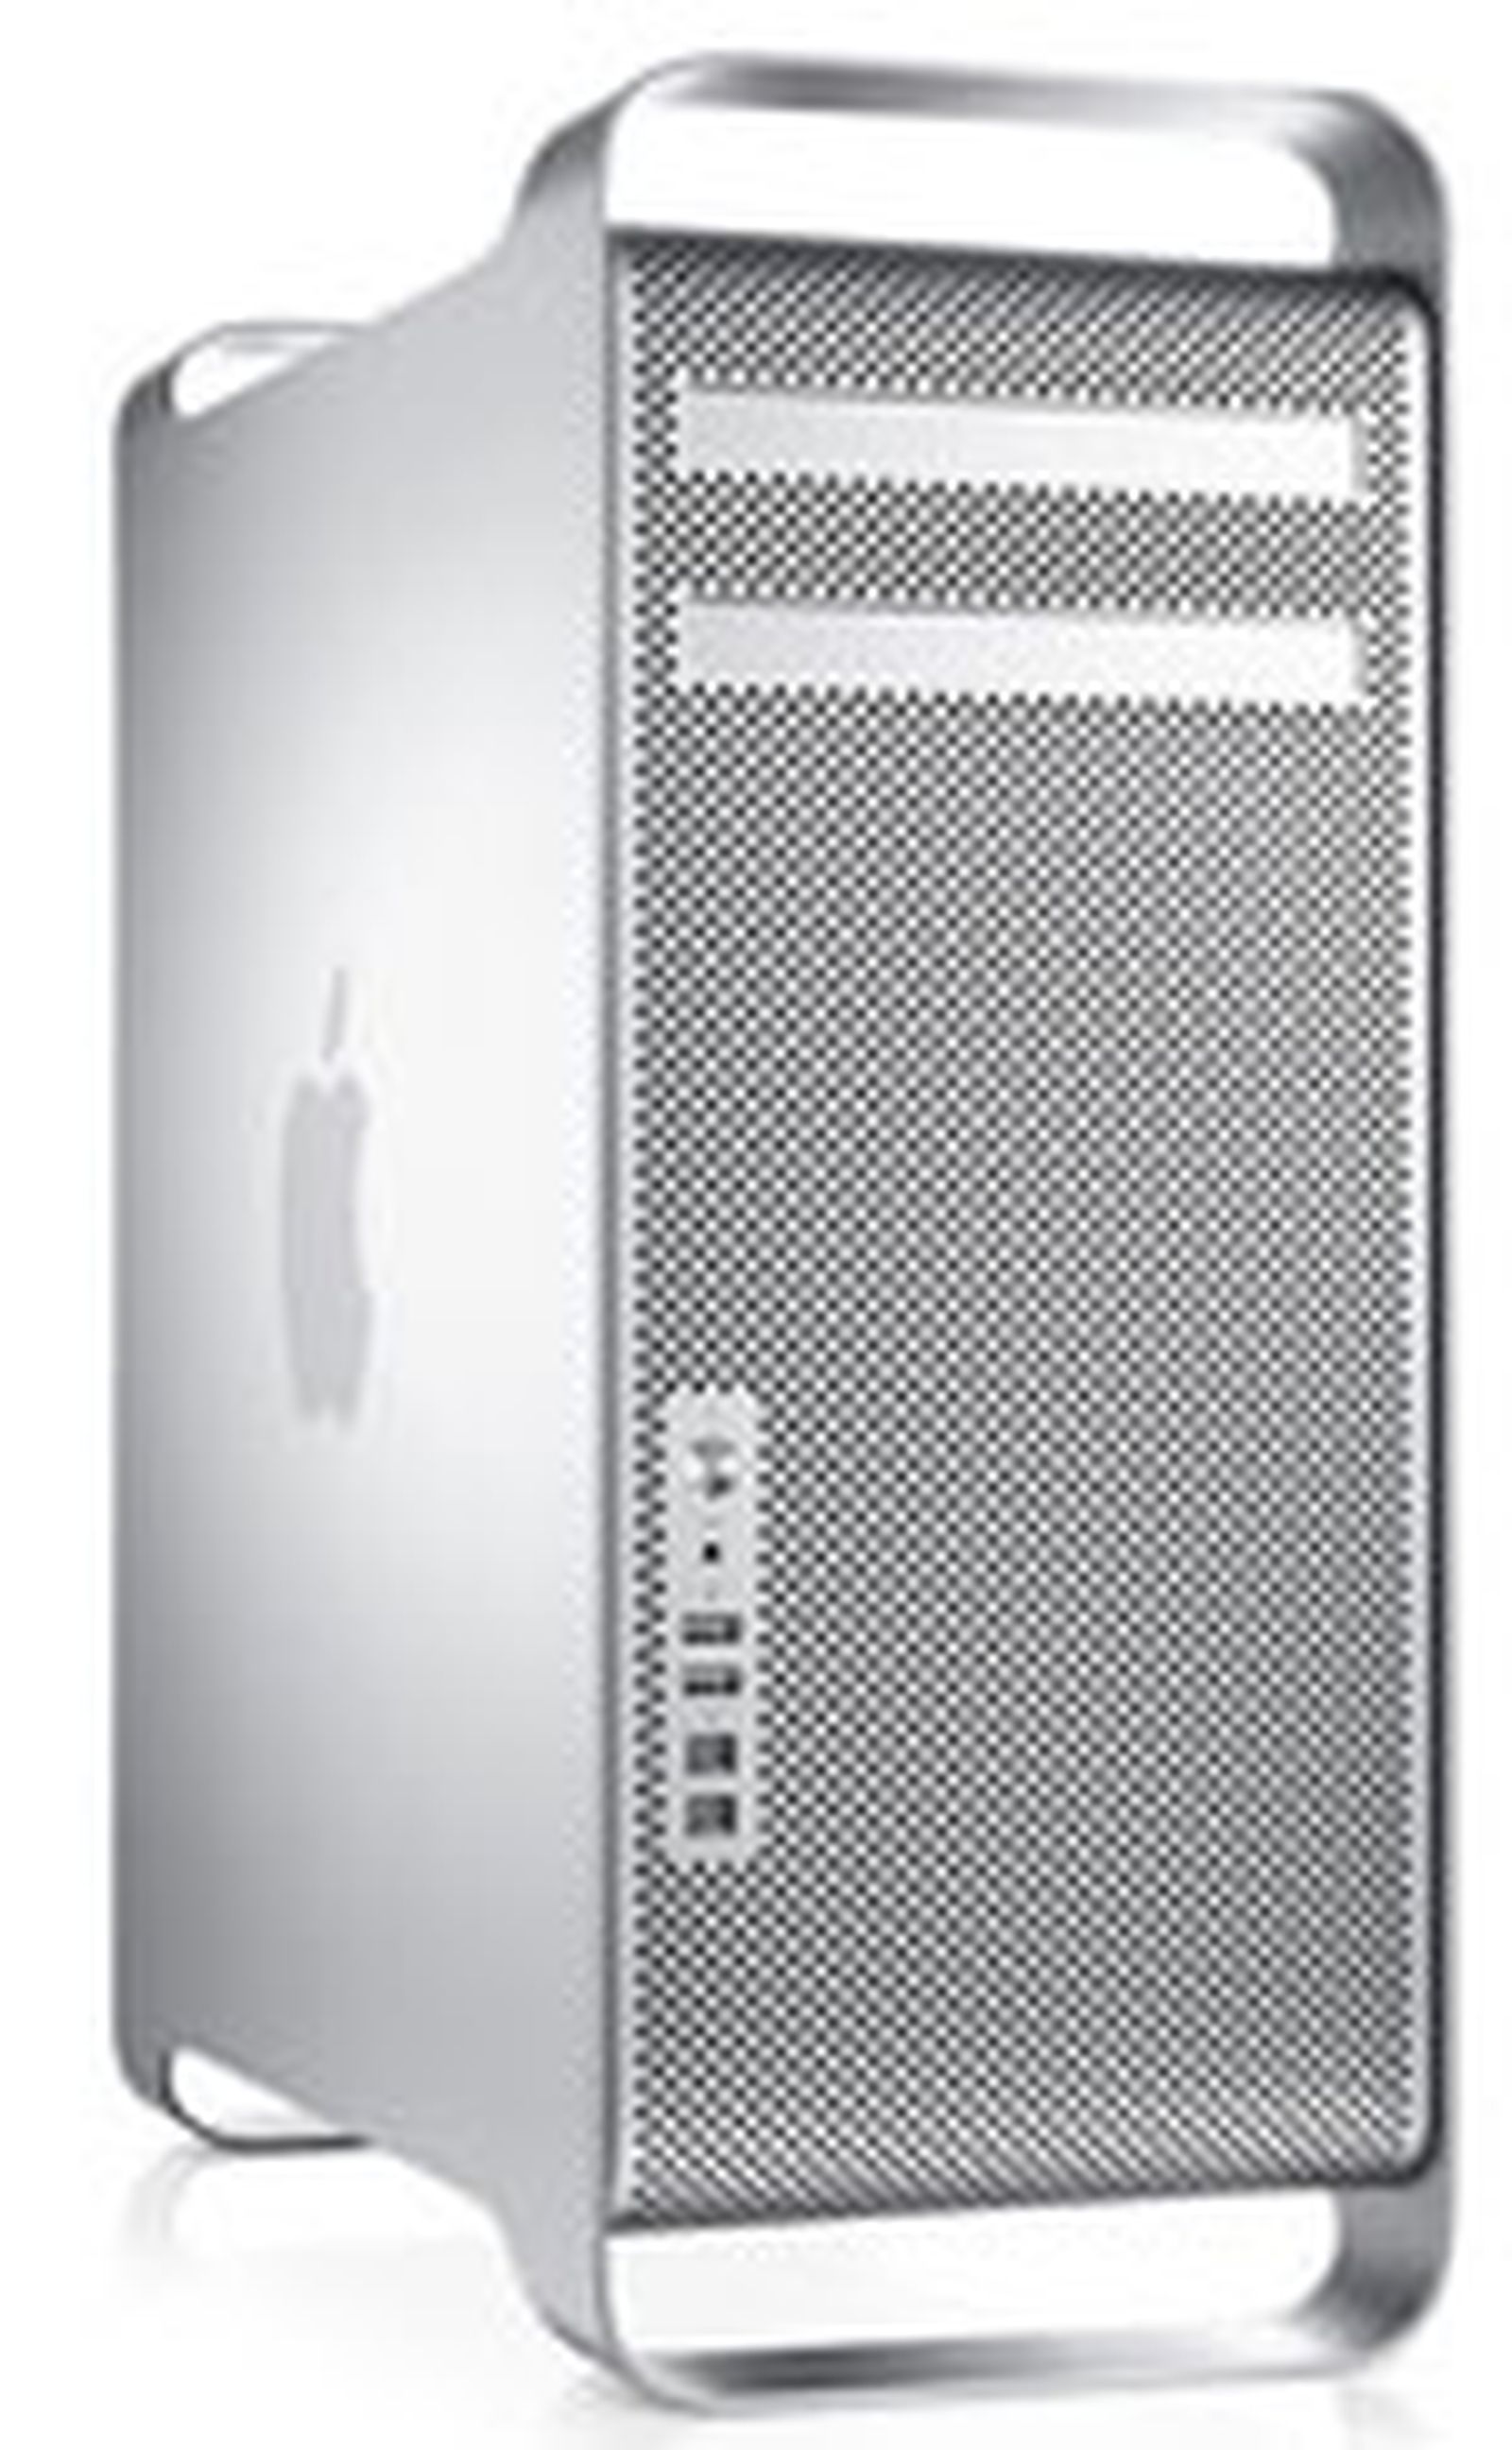 Apple 'Questioning' the Future of its Mac Pro Line? - MacRumors